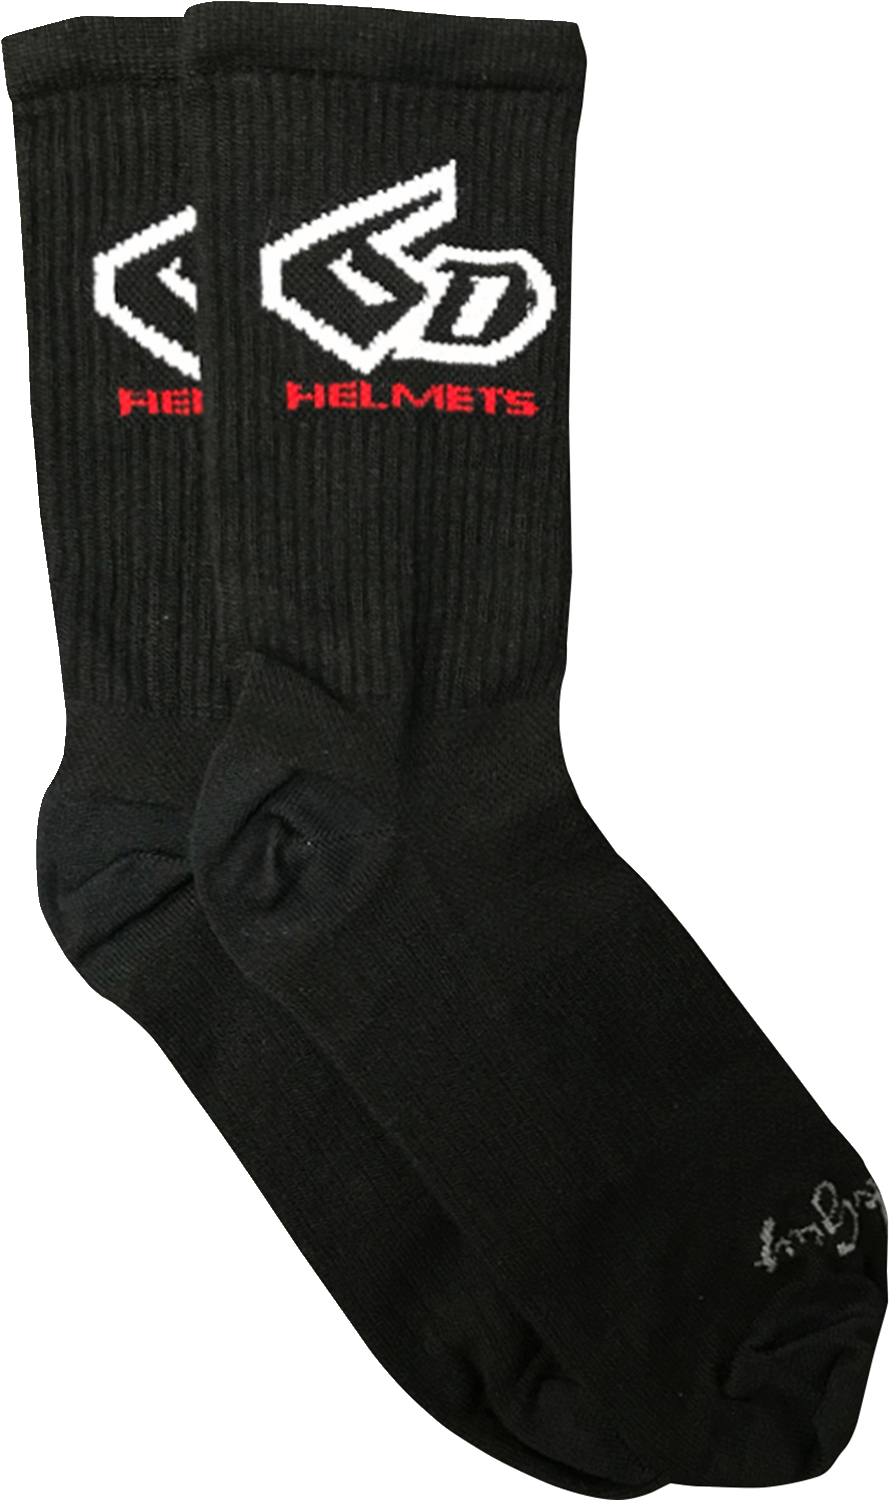 6D Cycling Socks - Black - Small/Medium 52-7000